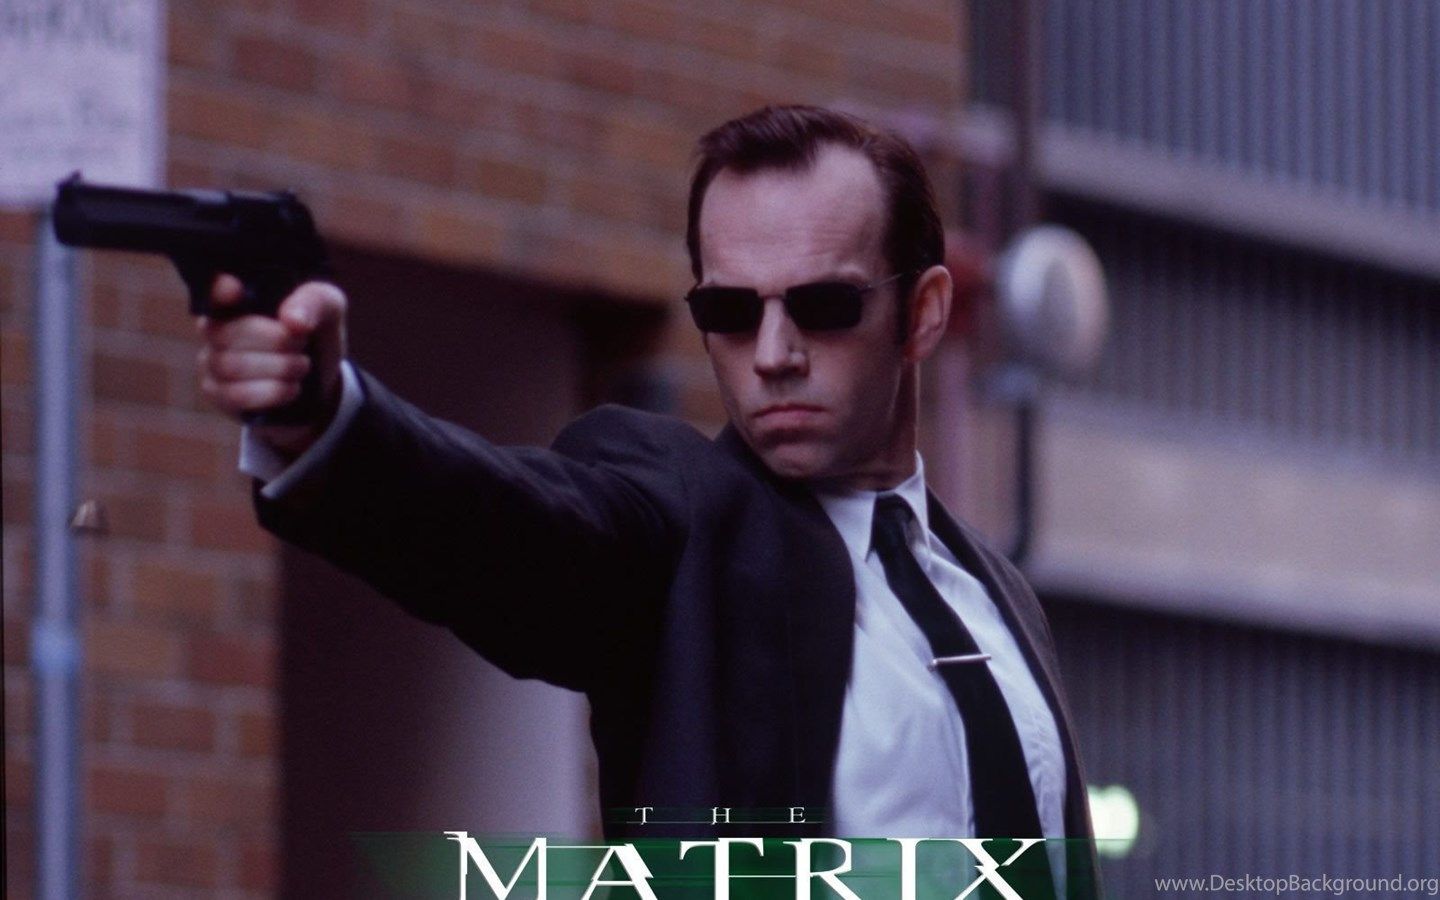 The Matrix Agent Smith Wallpaper The Matrix Wallpaper 2528119. Desktop Background